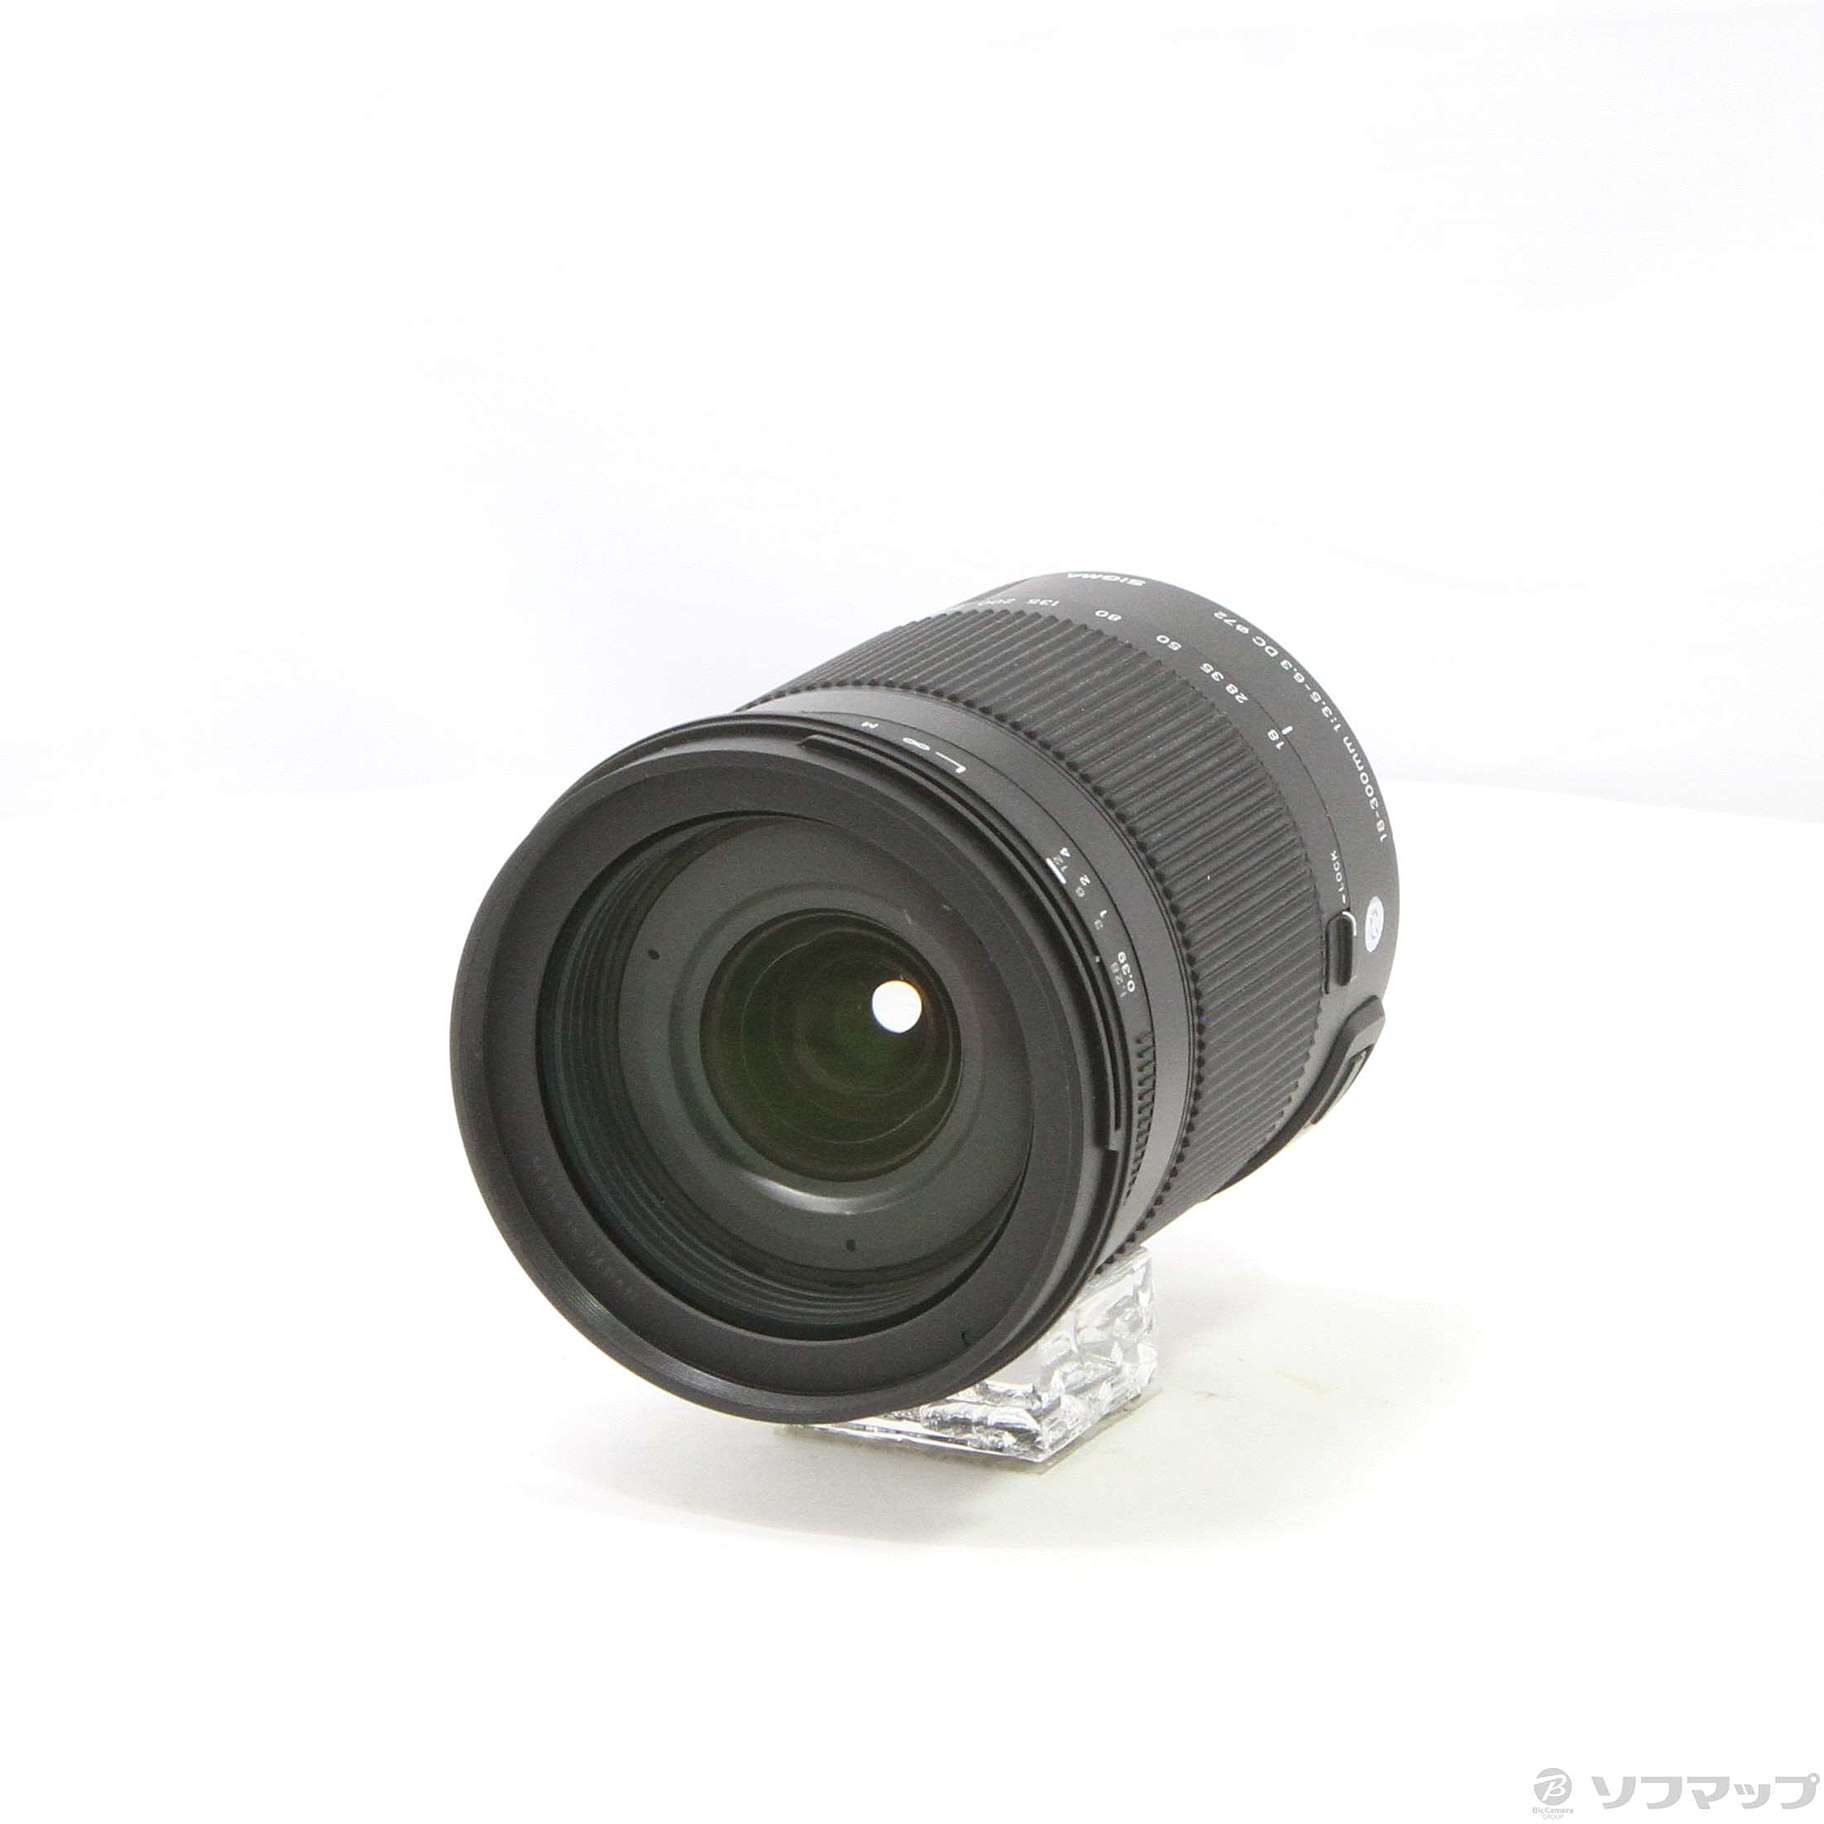 中古】18-300mm F3.5-6.3 DC MACRO OS HSM (Canon用) Contemporary